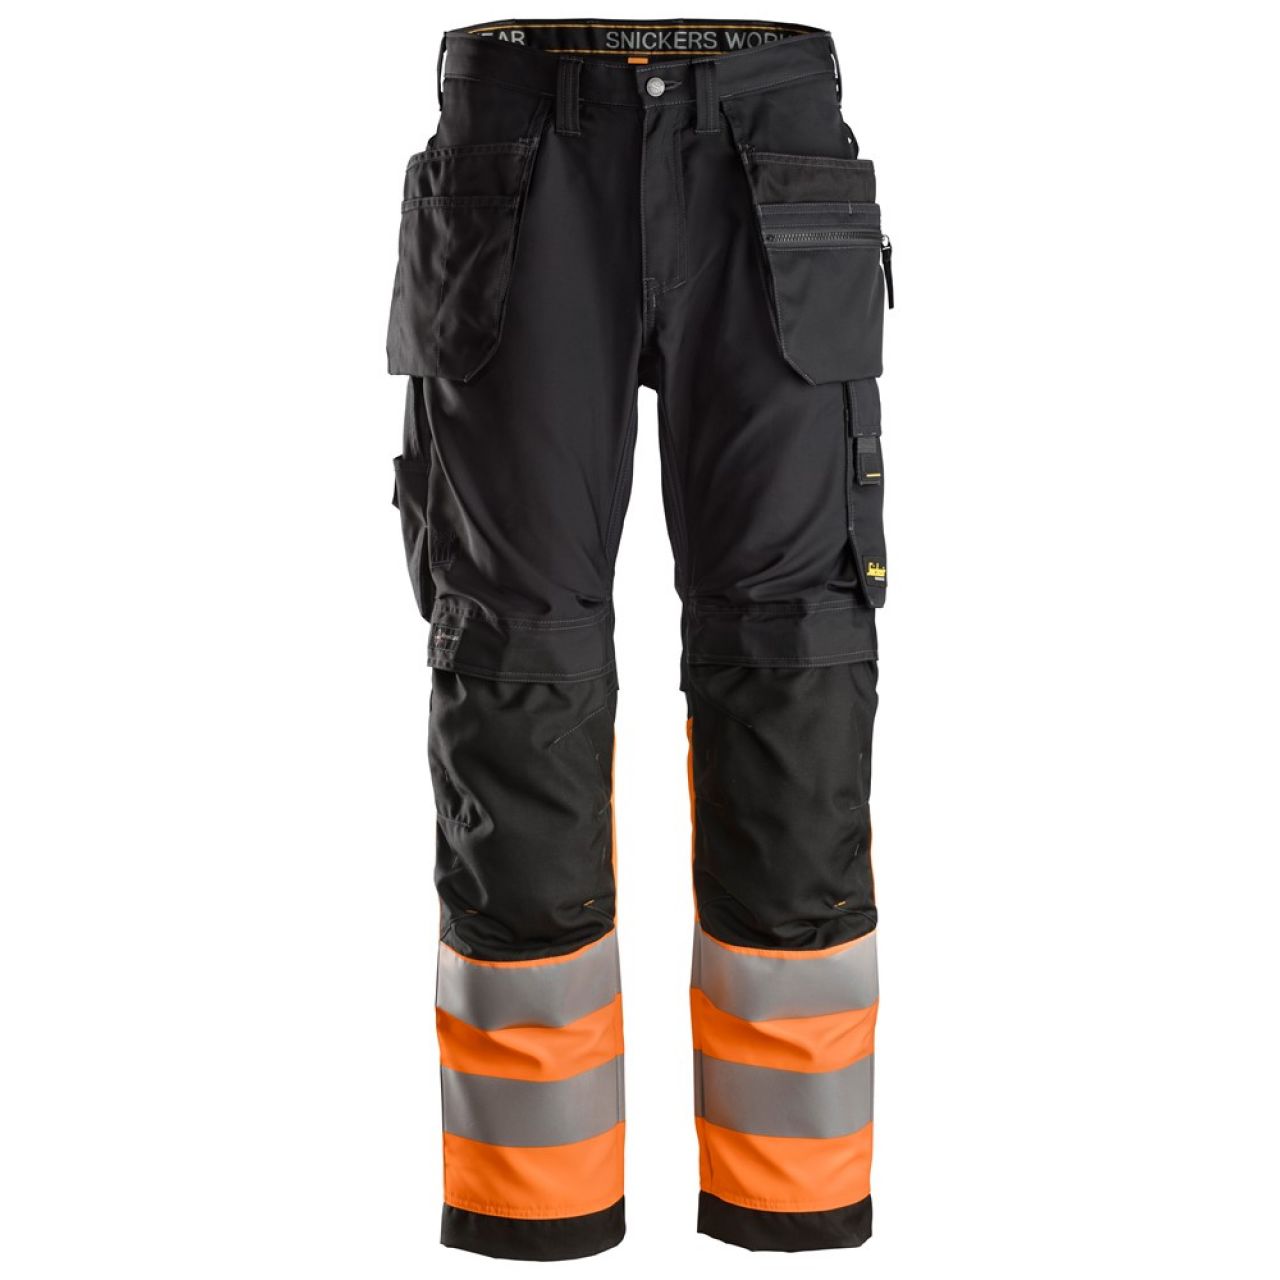 6233 Pantalones largos de trabajo de alta visibilidad clase 1 con bolsillos flotantes AllroundWork negro-naranja talla 48